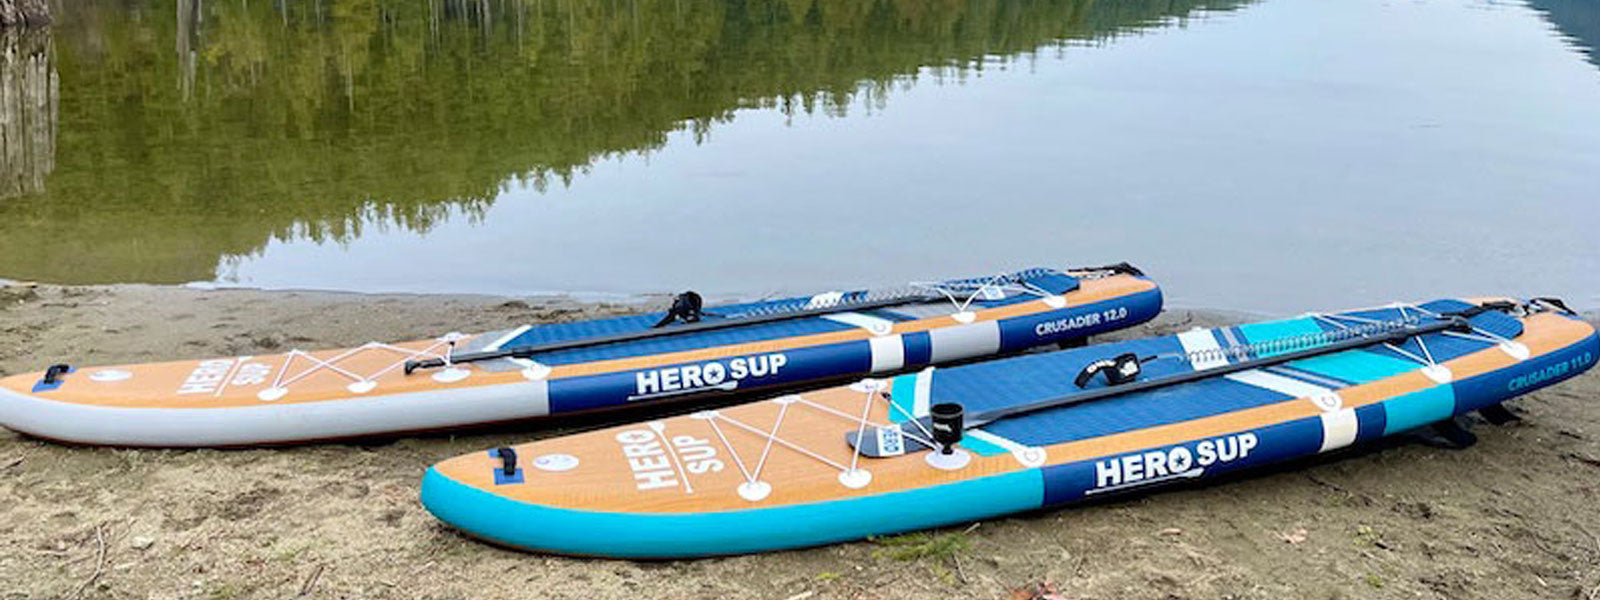 Hero SUP Hybrid Crusader inflatable SUP's